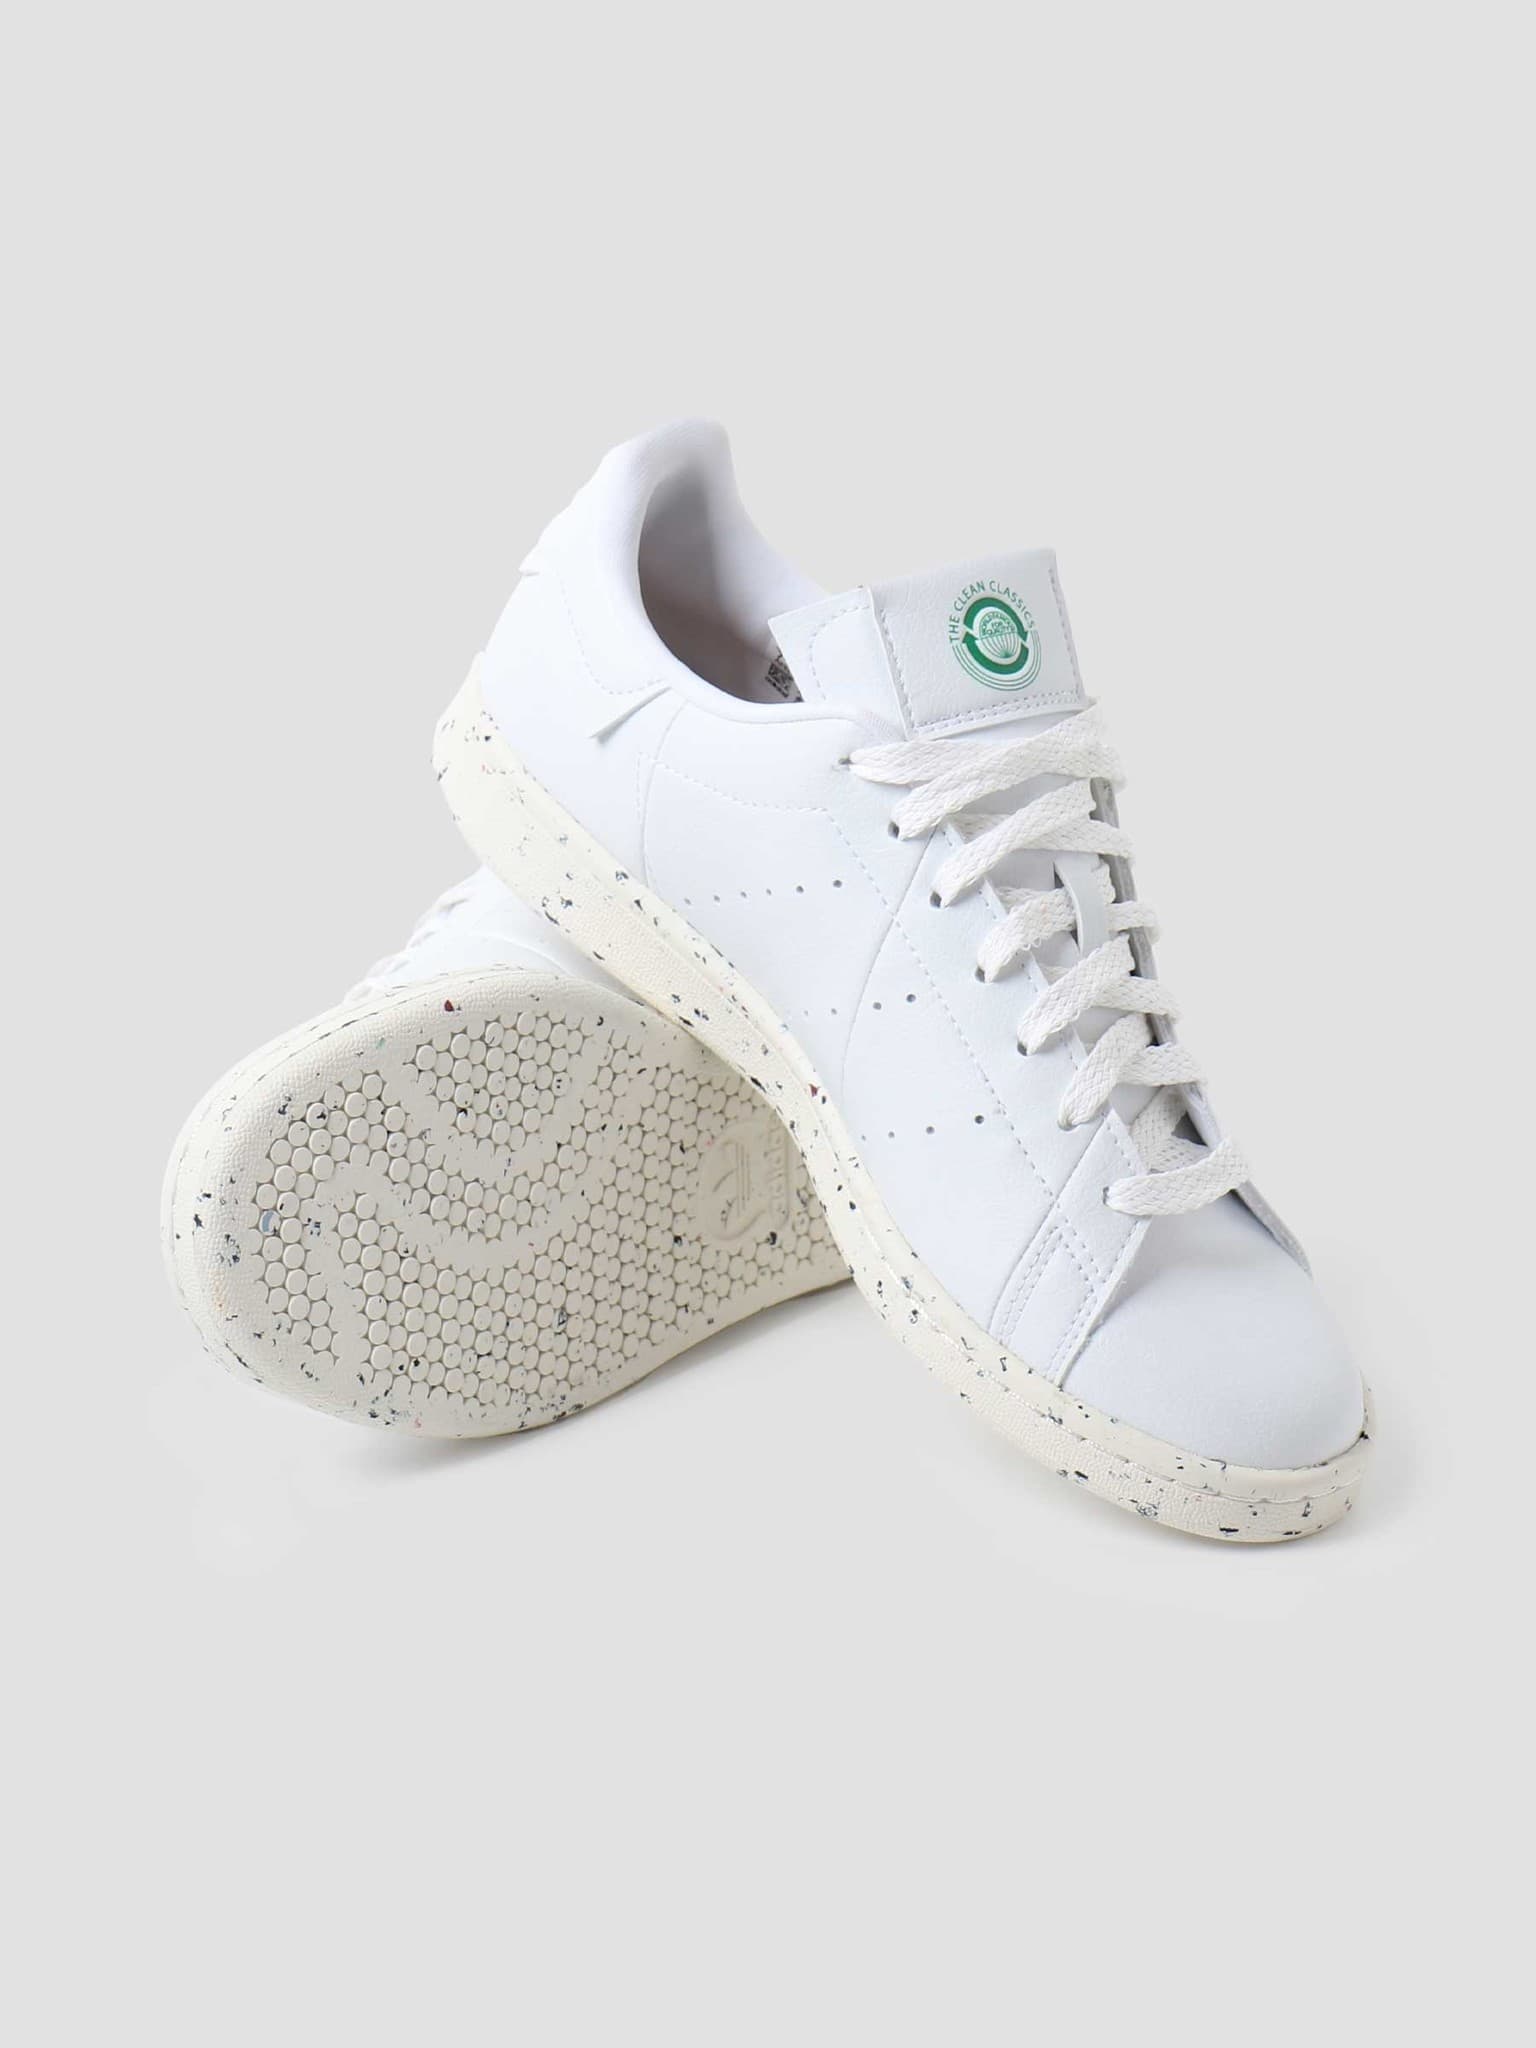 U Stan Smith Footwear White Off-White Green FV0534